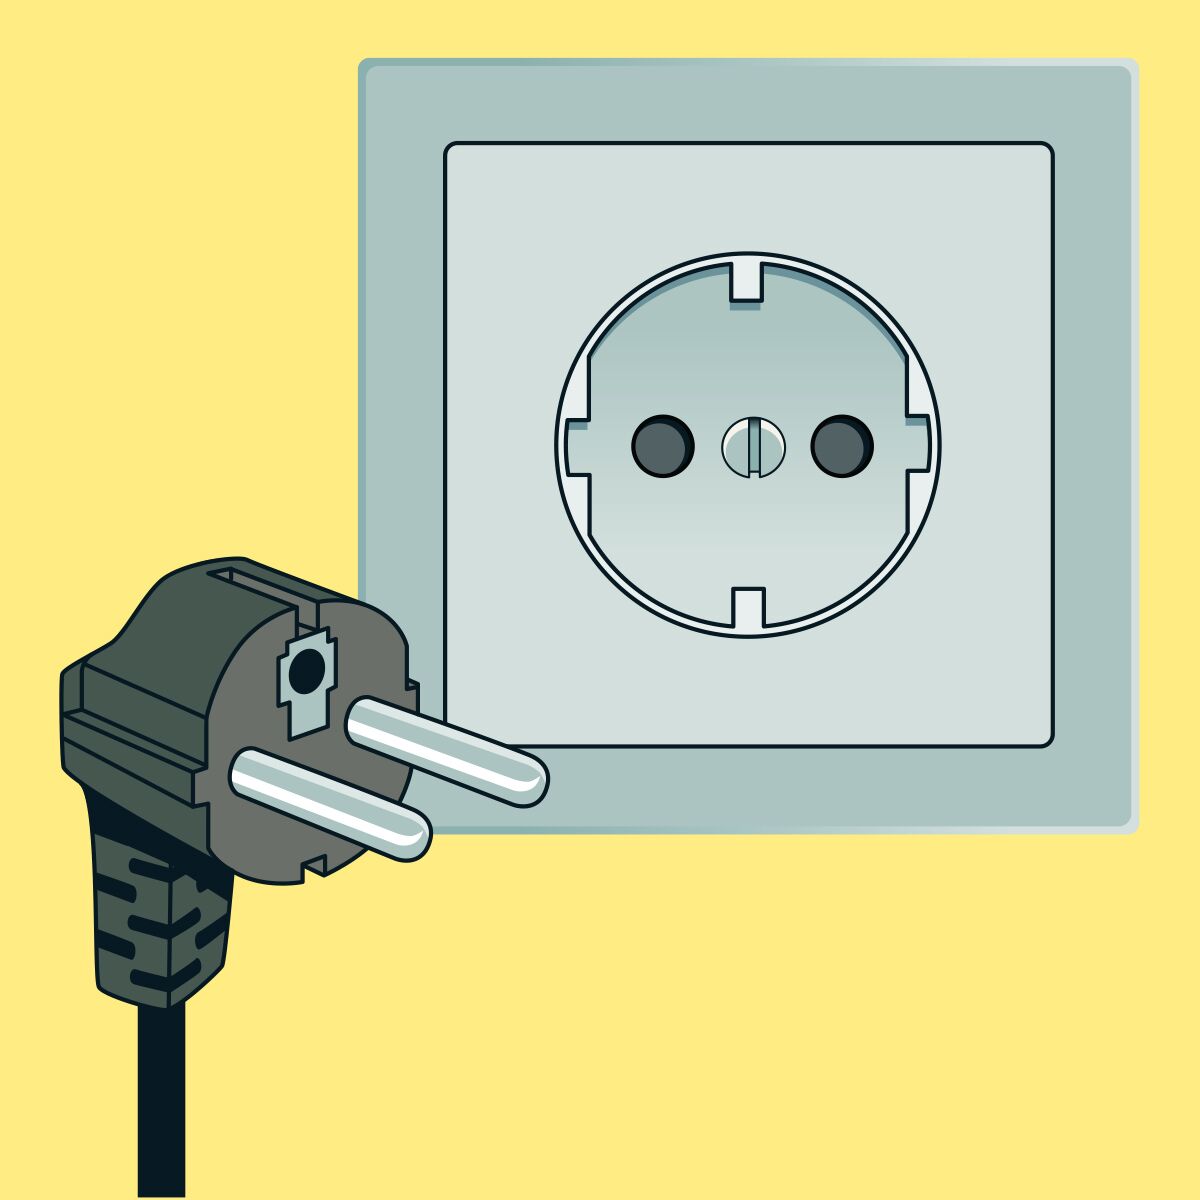 Type F plug and socket